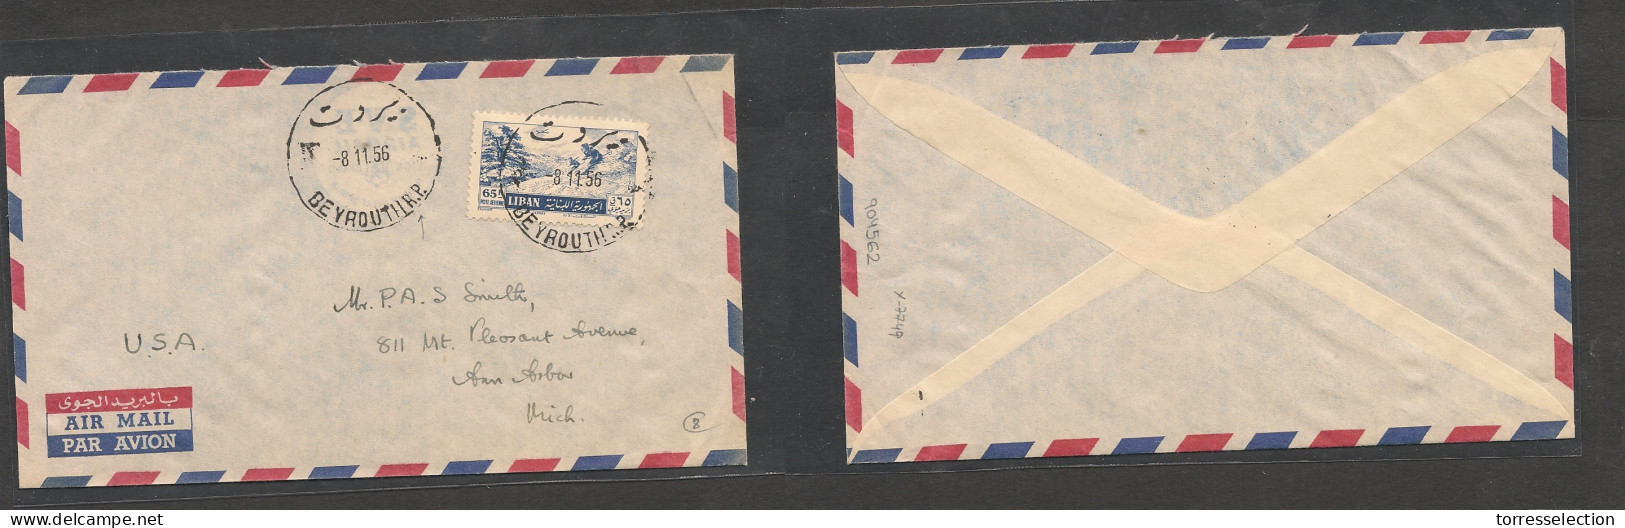 LEBANON. Lebanon Cover - 1956 Beyrouth To Ann Arbor Mich USA Air Fkd Env Single Stamp, XF XSALE. - Liban